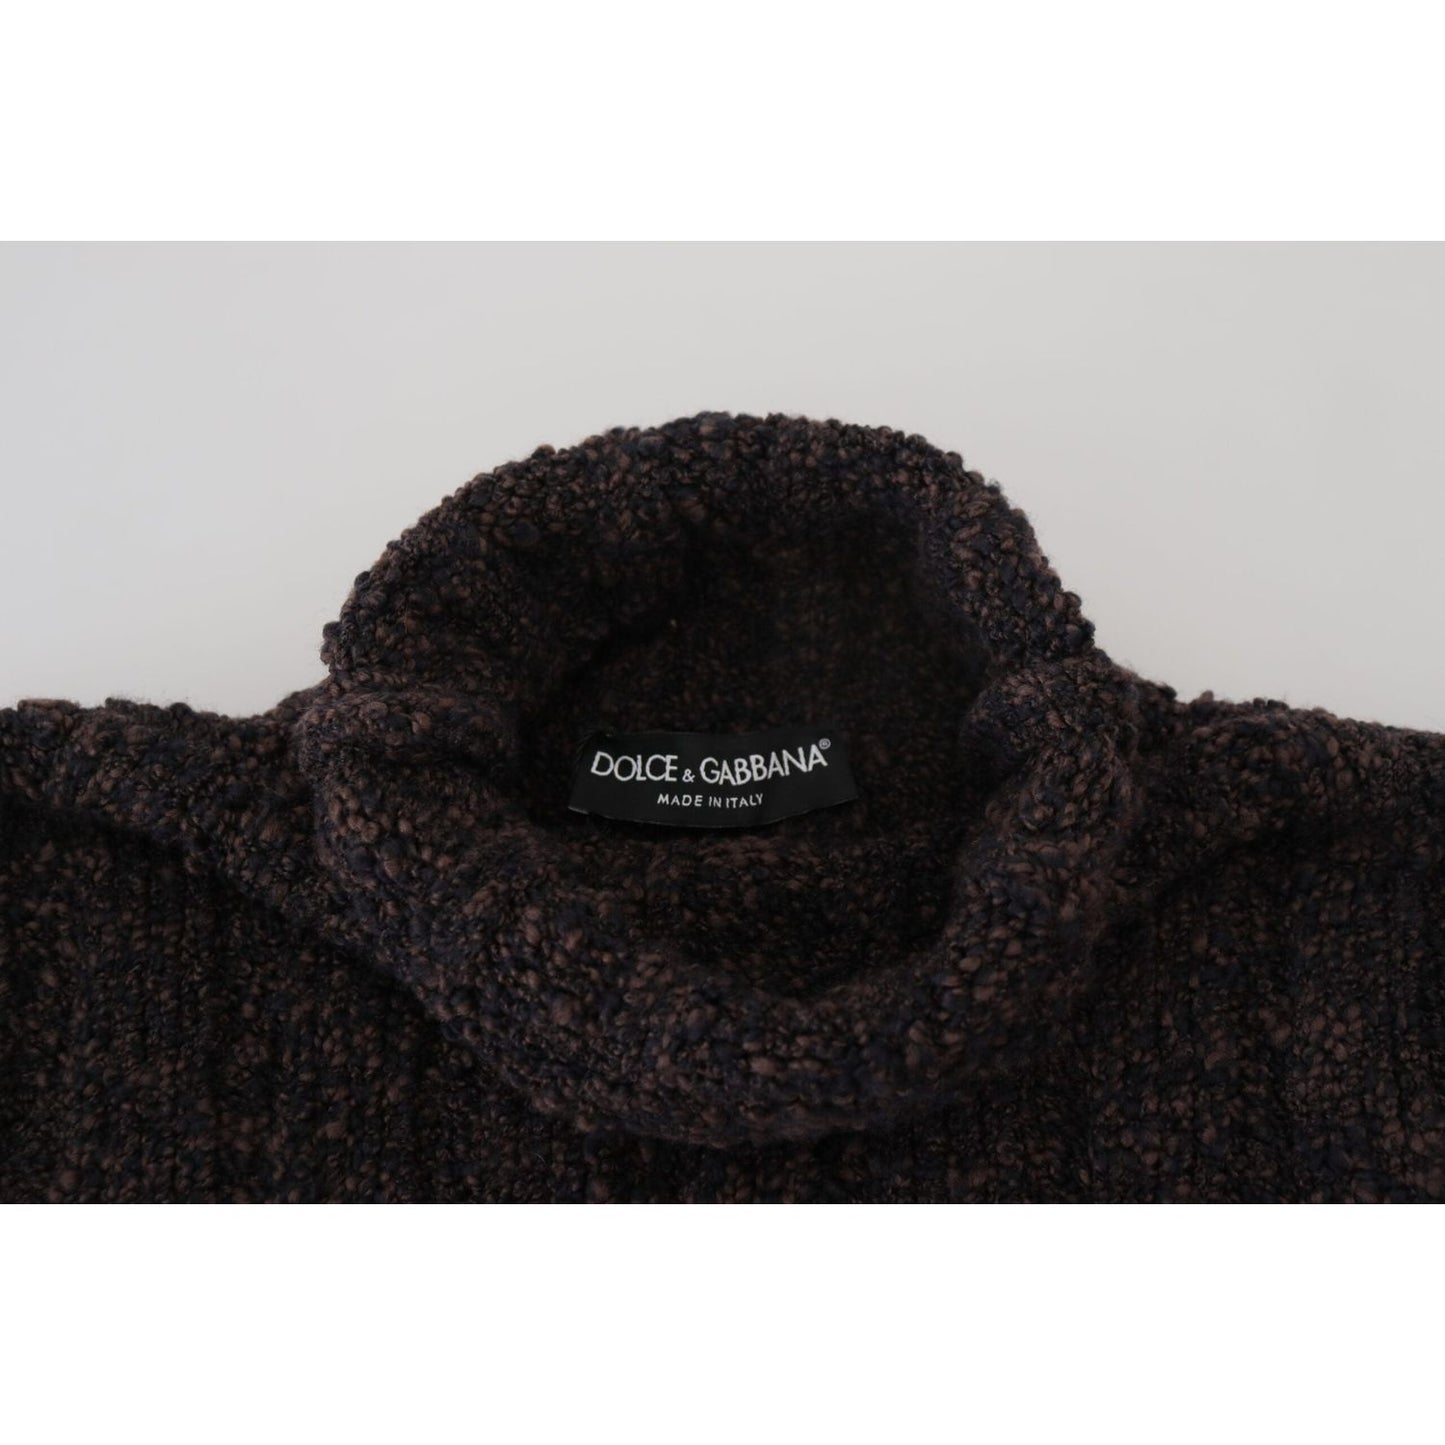 Dolce & Gabbana Elegant Turtleneck Wool-Blend Sweater brown-wool-knit-turtleneck-pullover-sweater IMG_6358-scaled-3c68a7af-55b.jpg